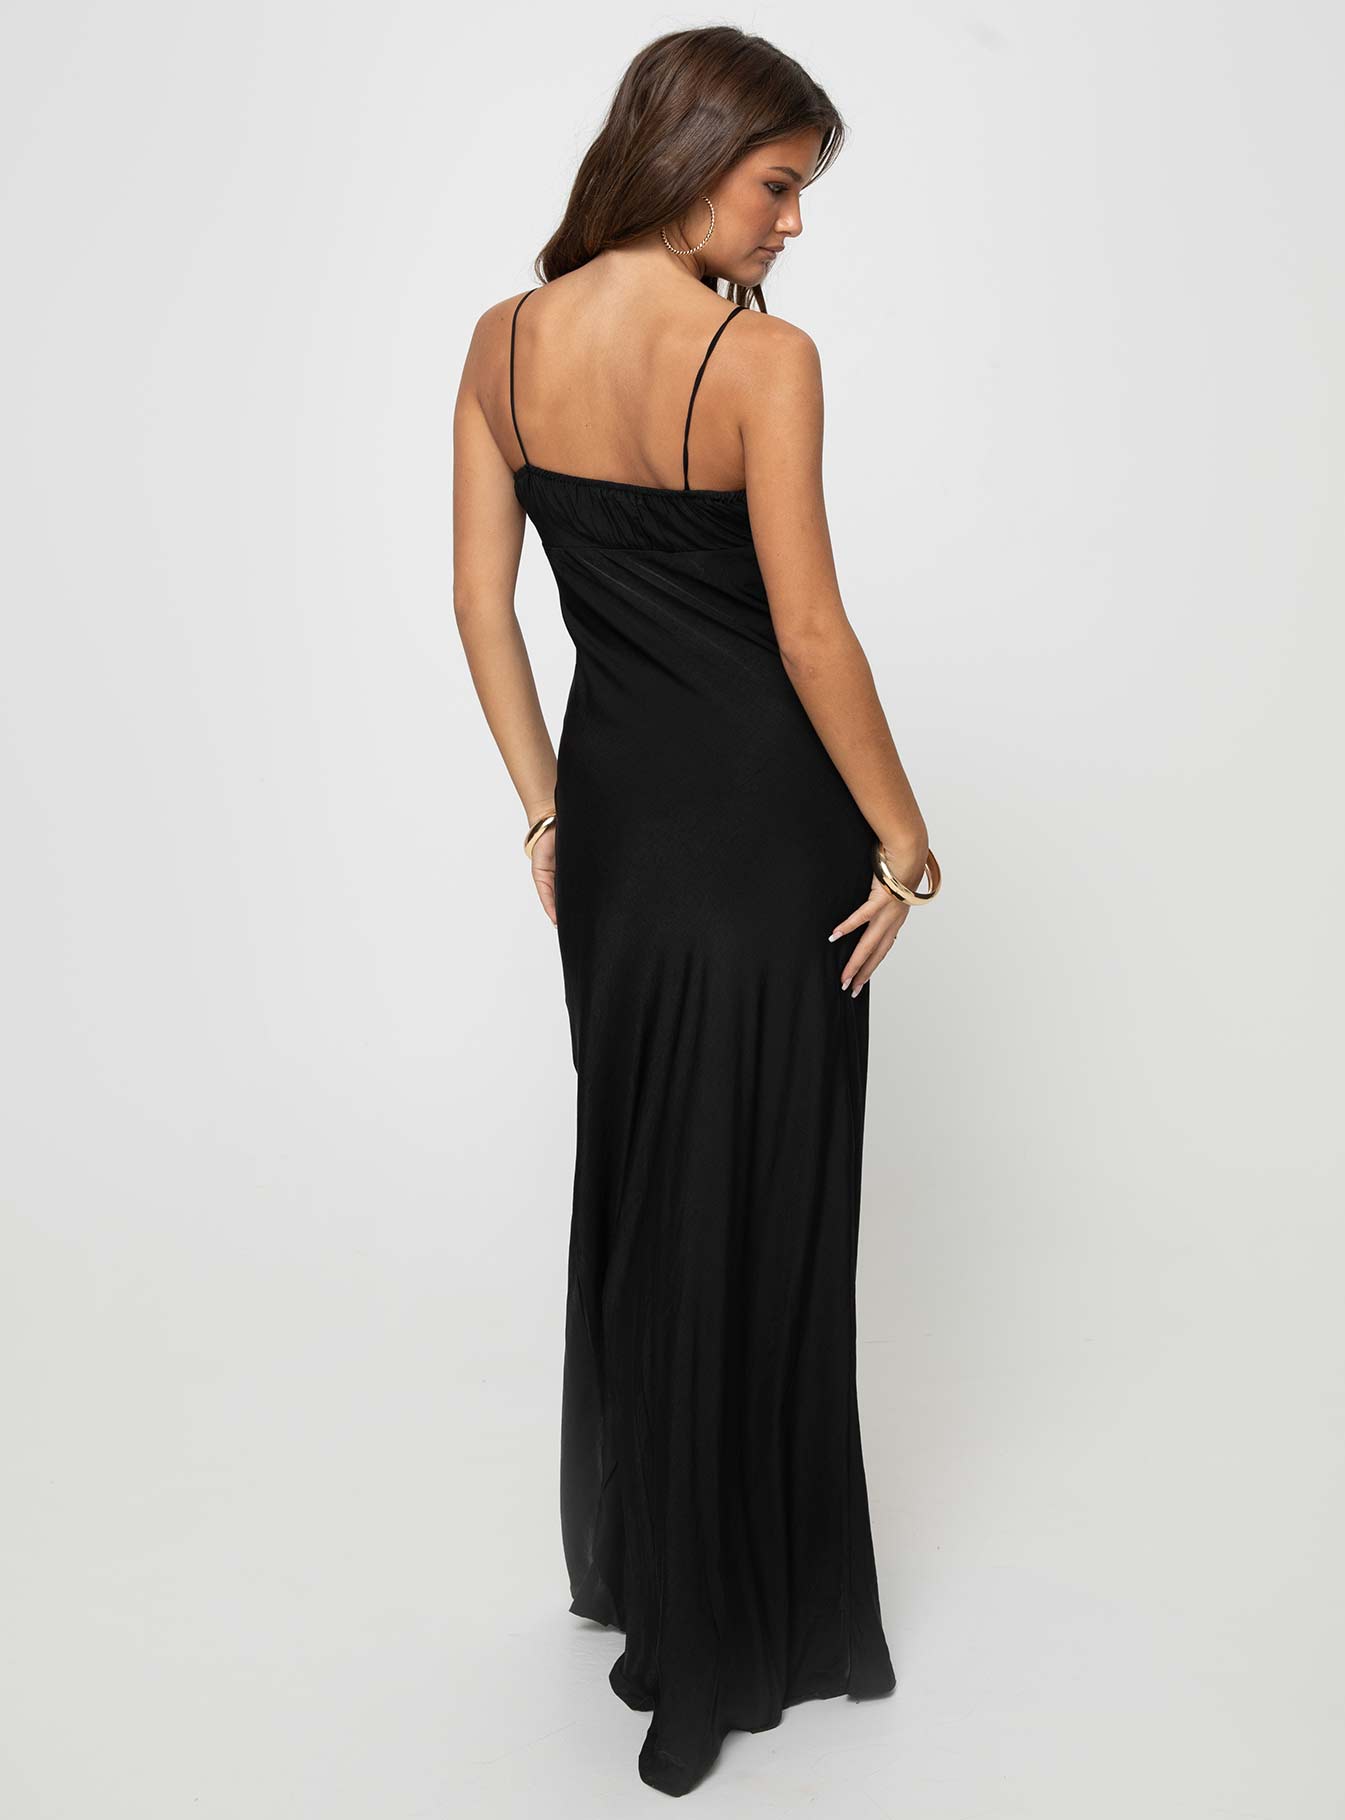 Shop Formal Dress - Noda Maxi Dress Black secondary image